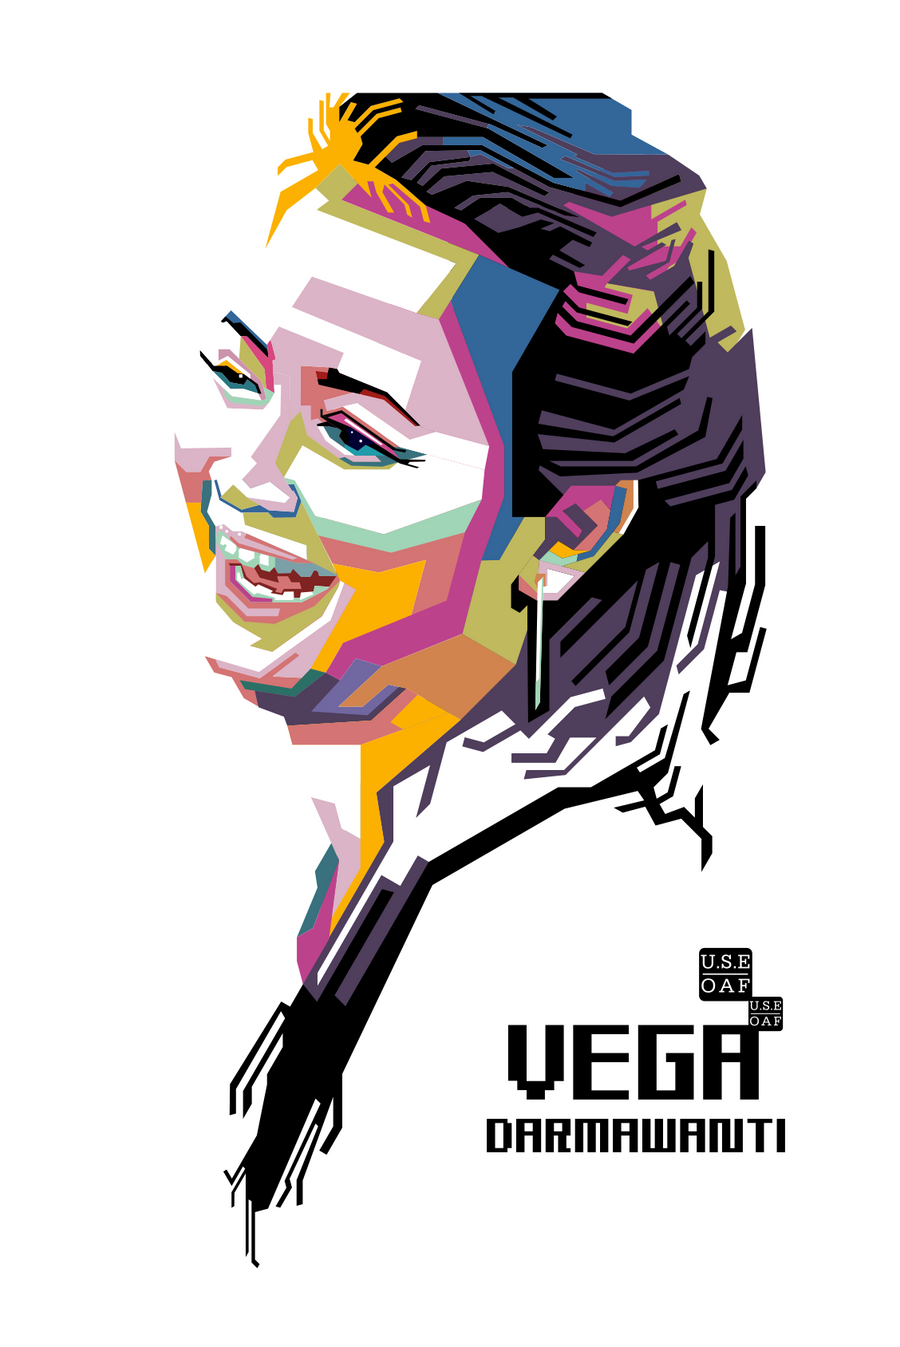 Vega Darmawanti Bukan Empat Mata On Wpap By Yusuf Graphicoholic On Deviantart